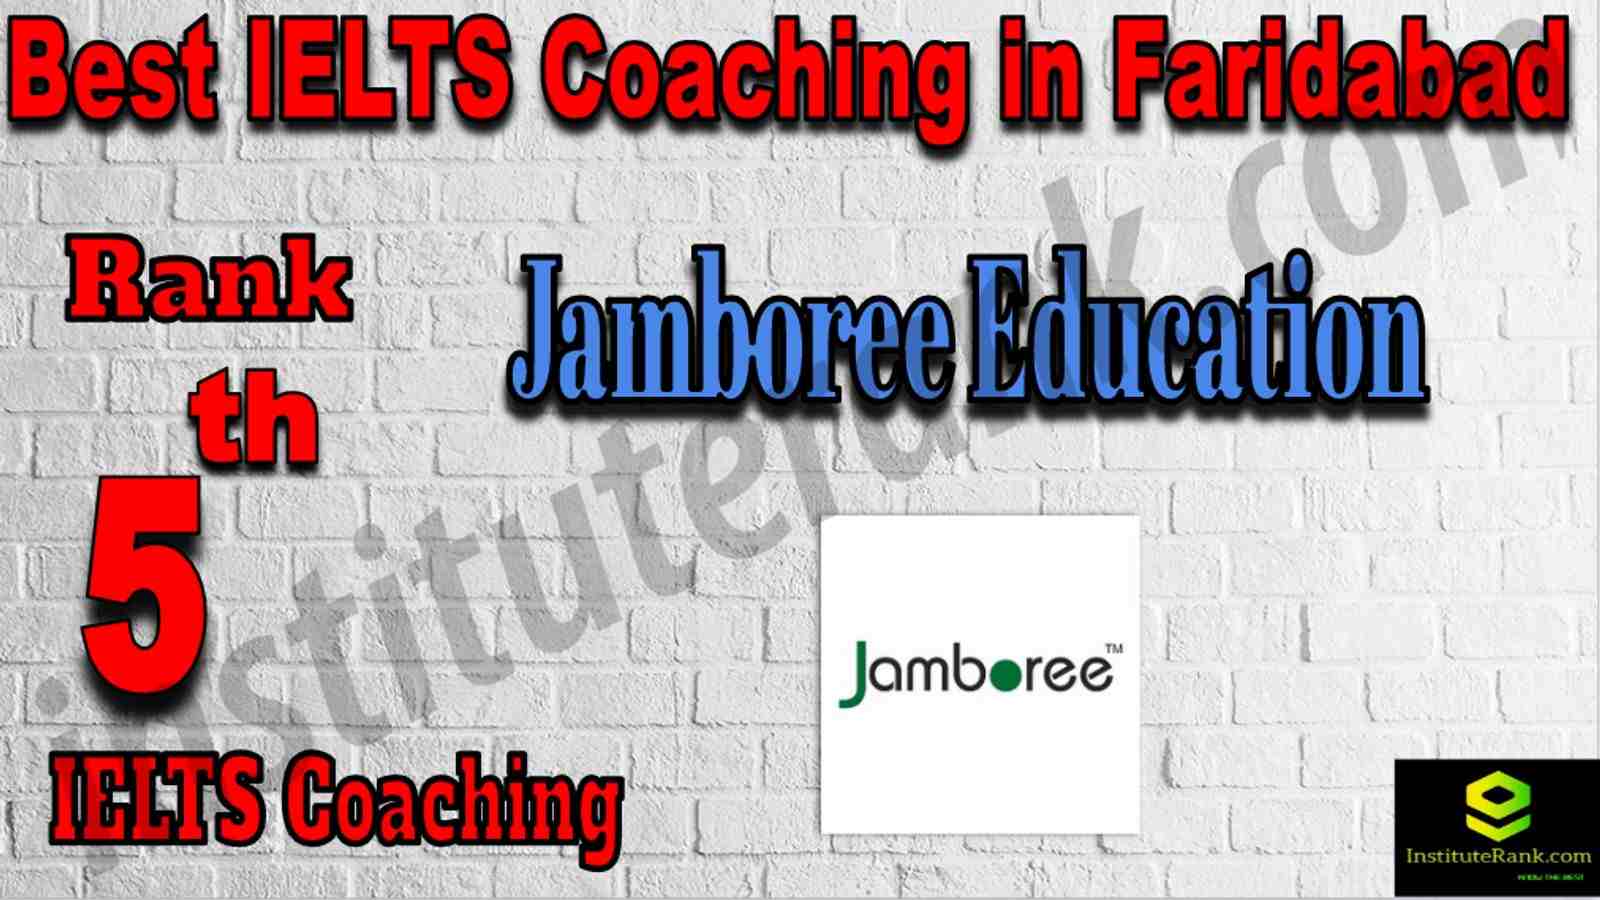 5th Best IELTS Coaching in Faridabad